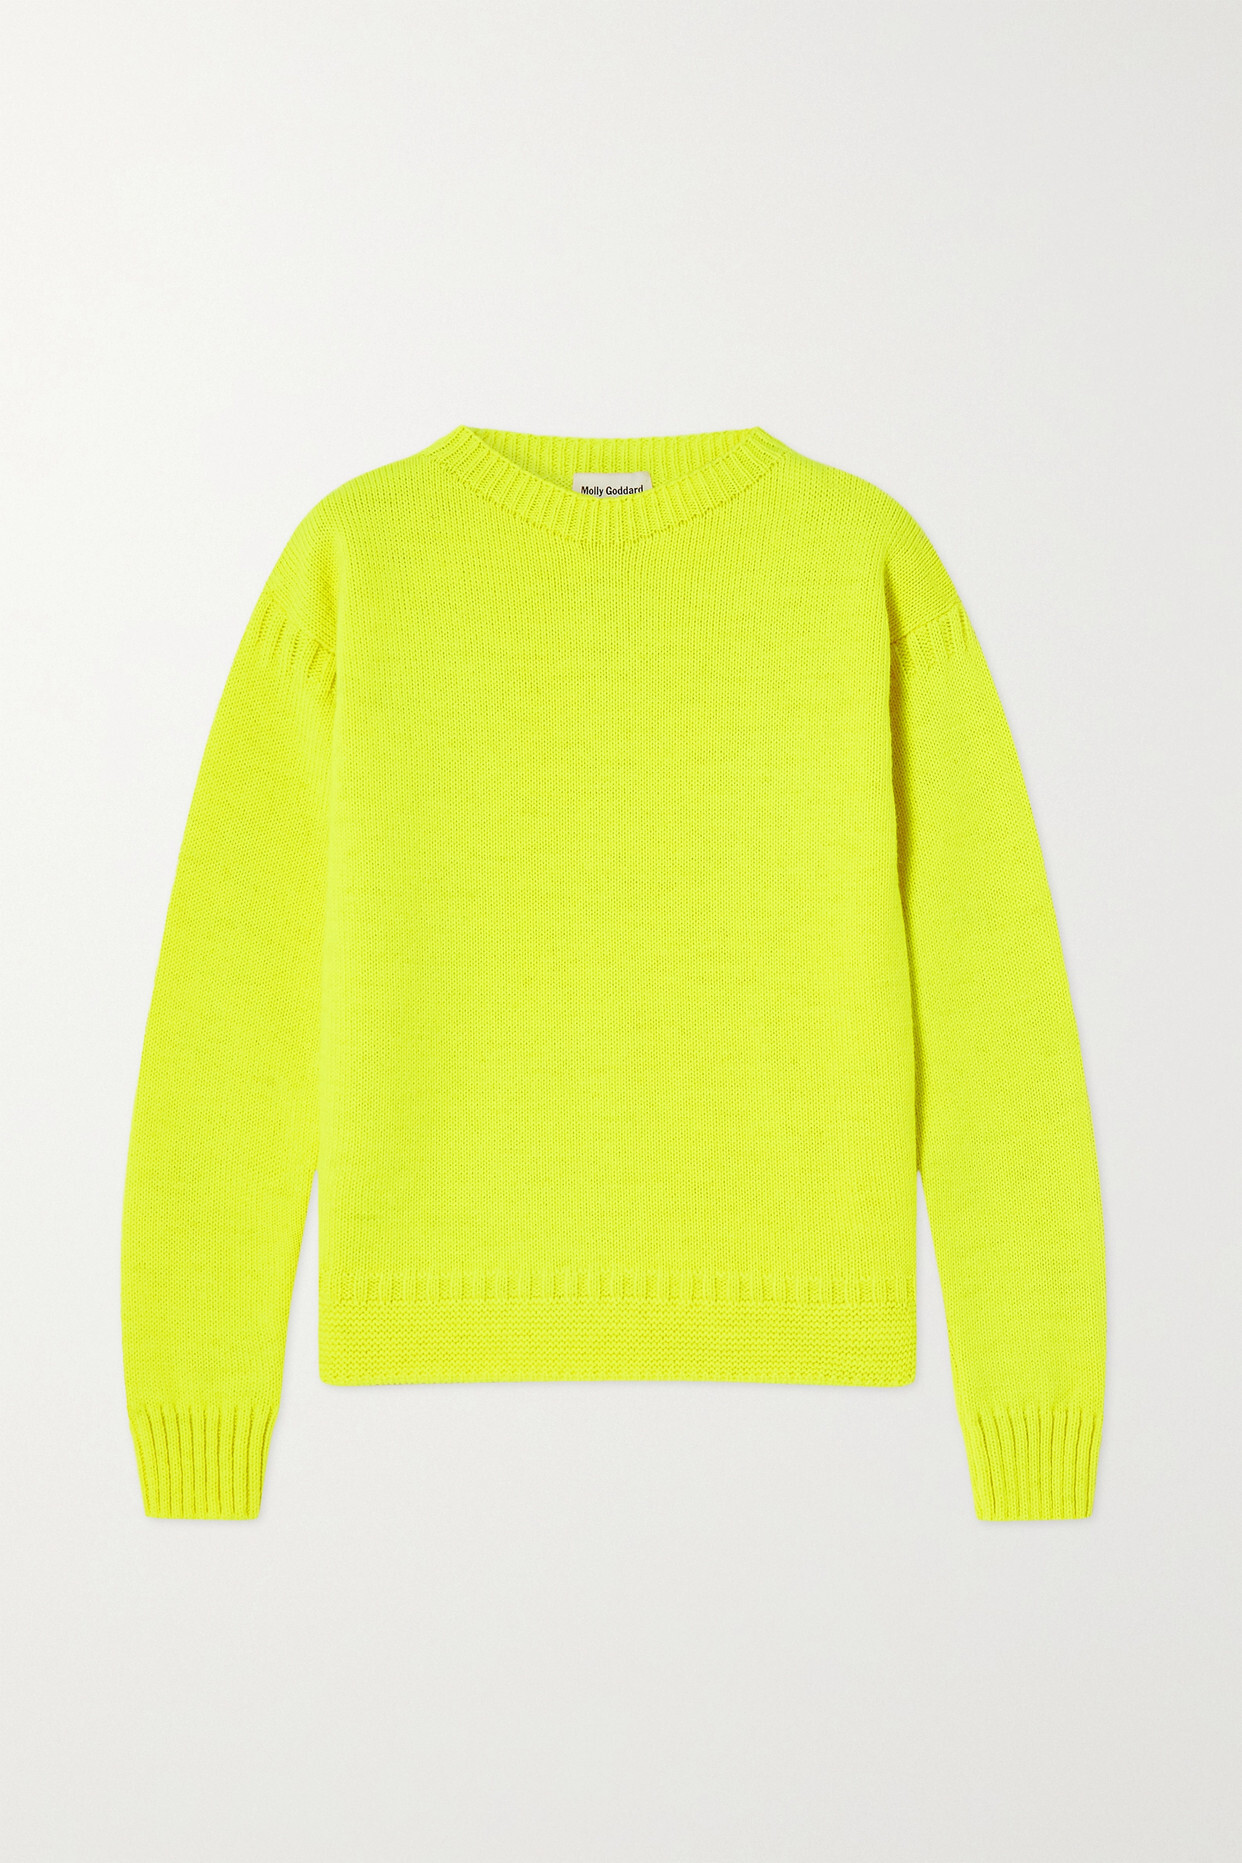 Molly Goddard - Ayla Neon Wool Sweater - Yellow